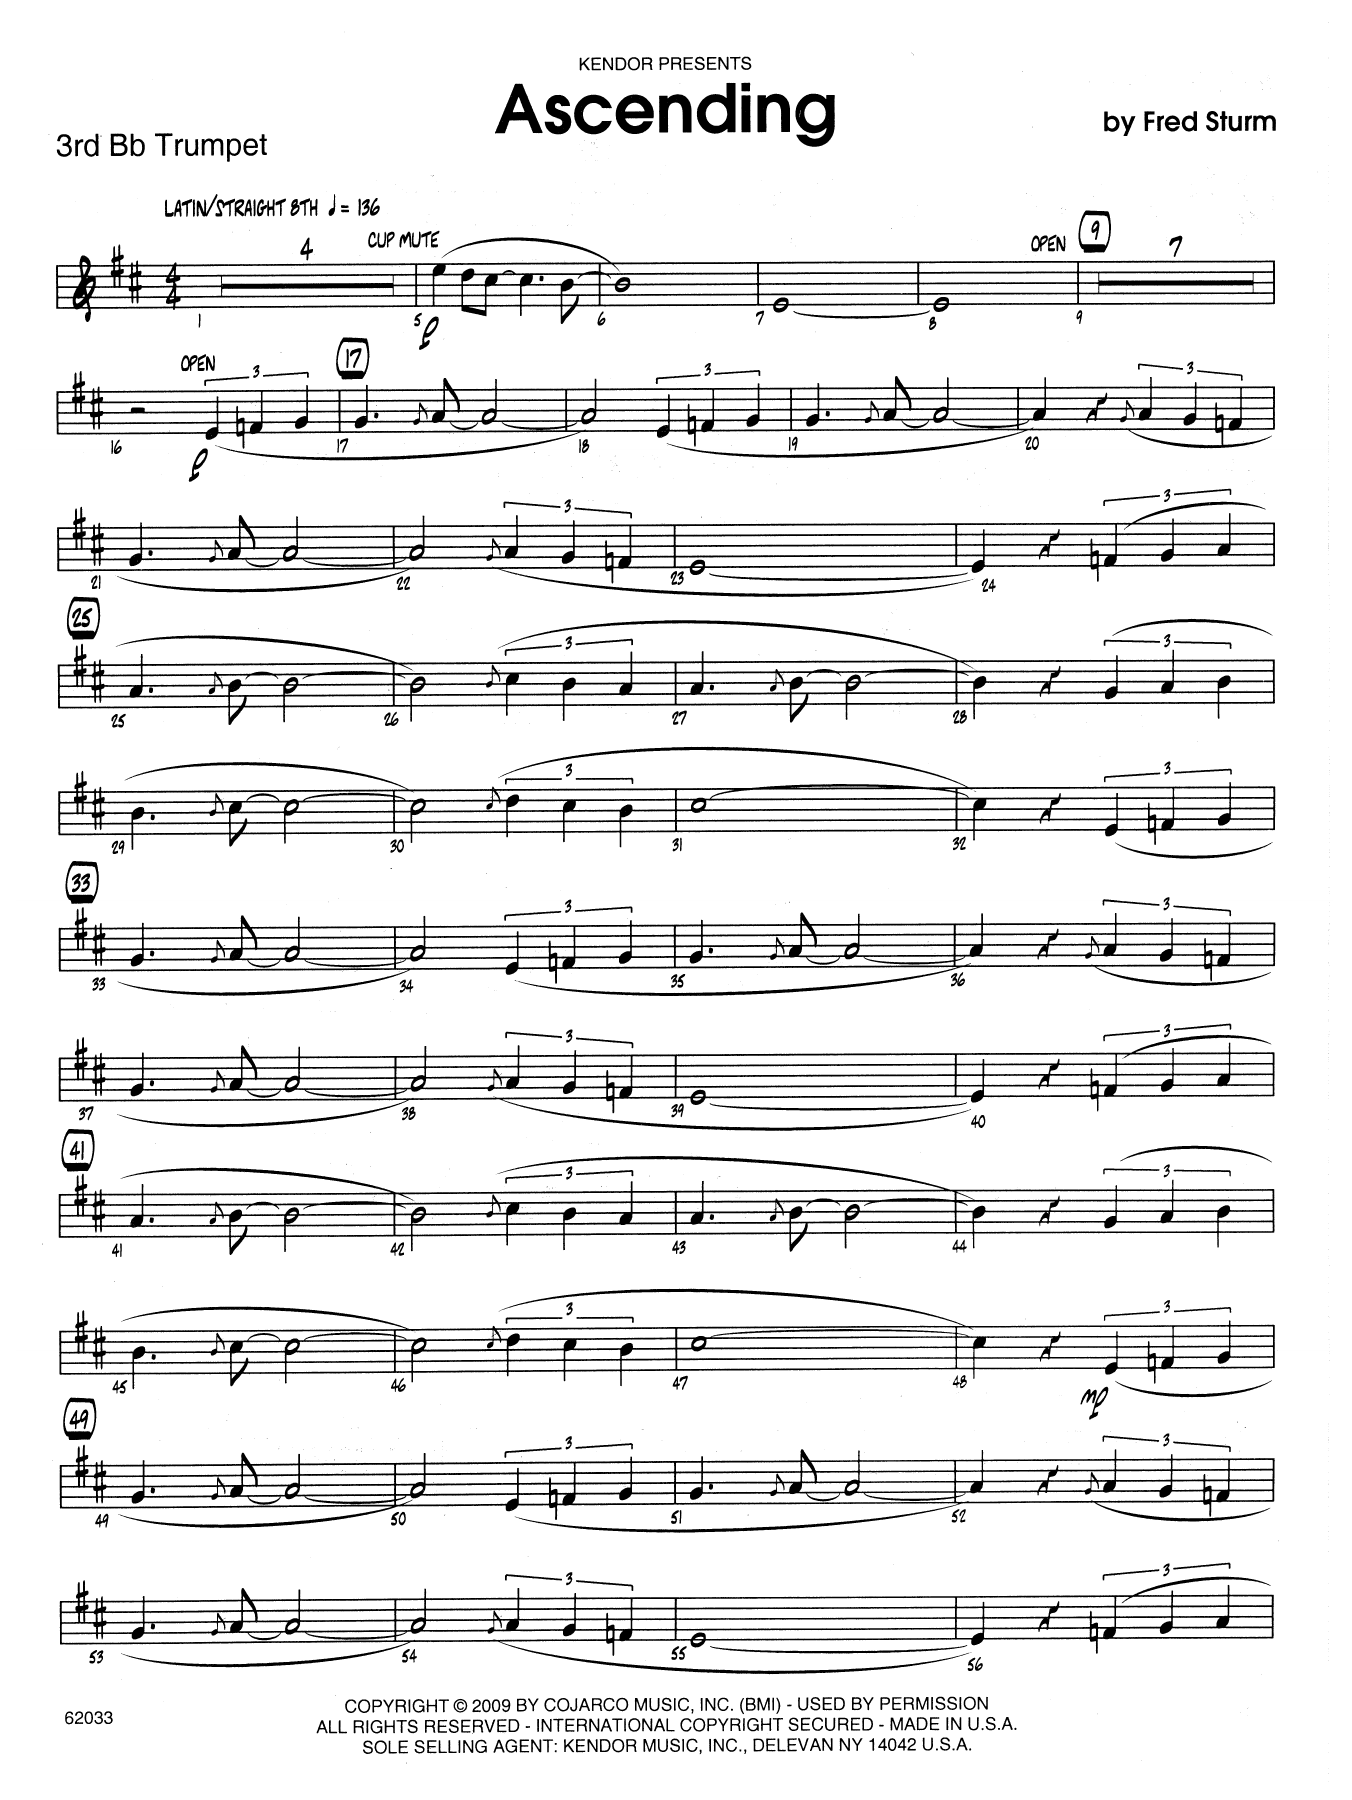 Download Fred Sturm Ascending - 3rd Bb Trumpet Sheet Music